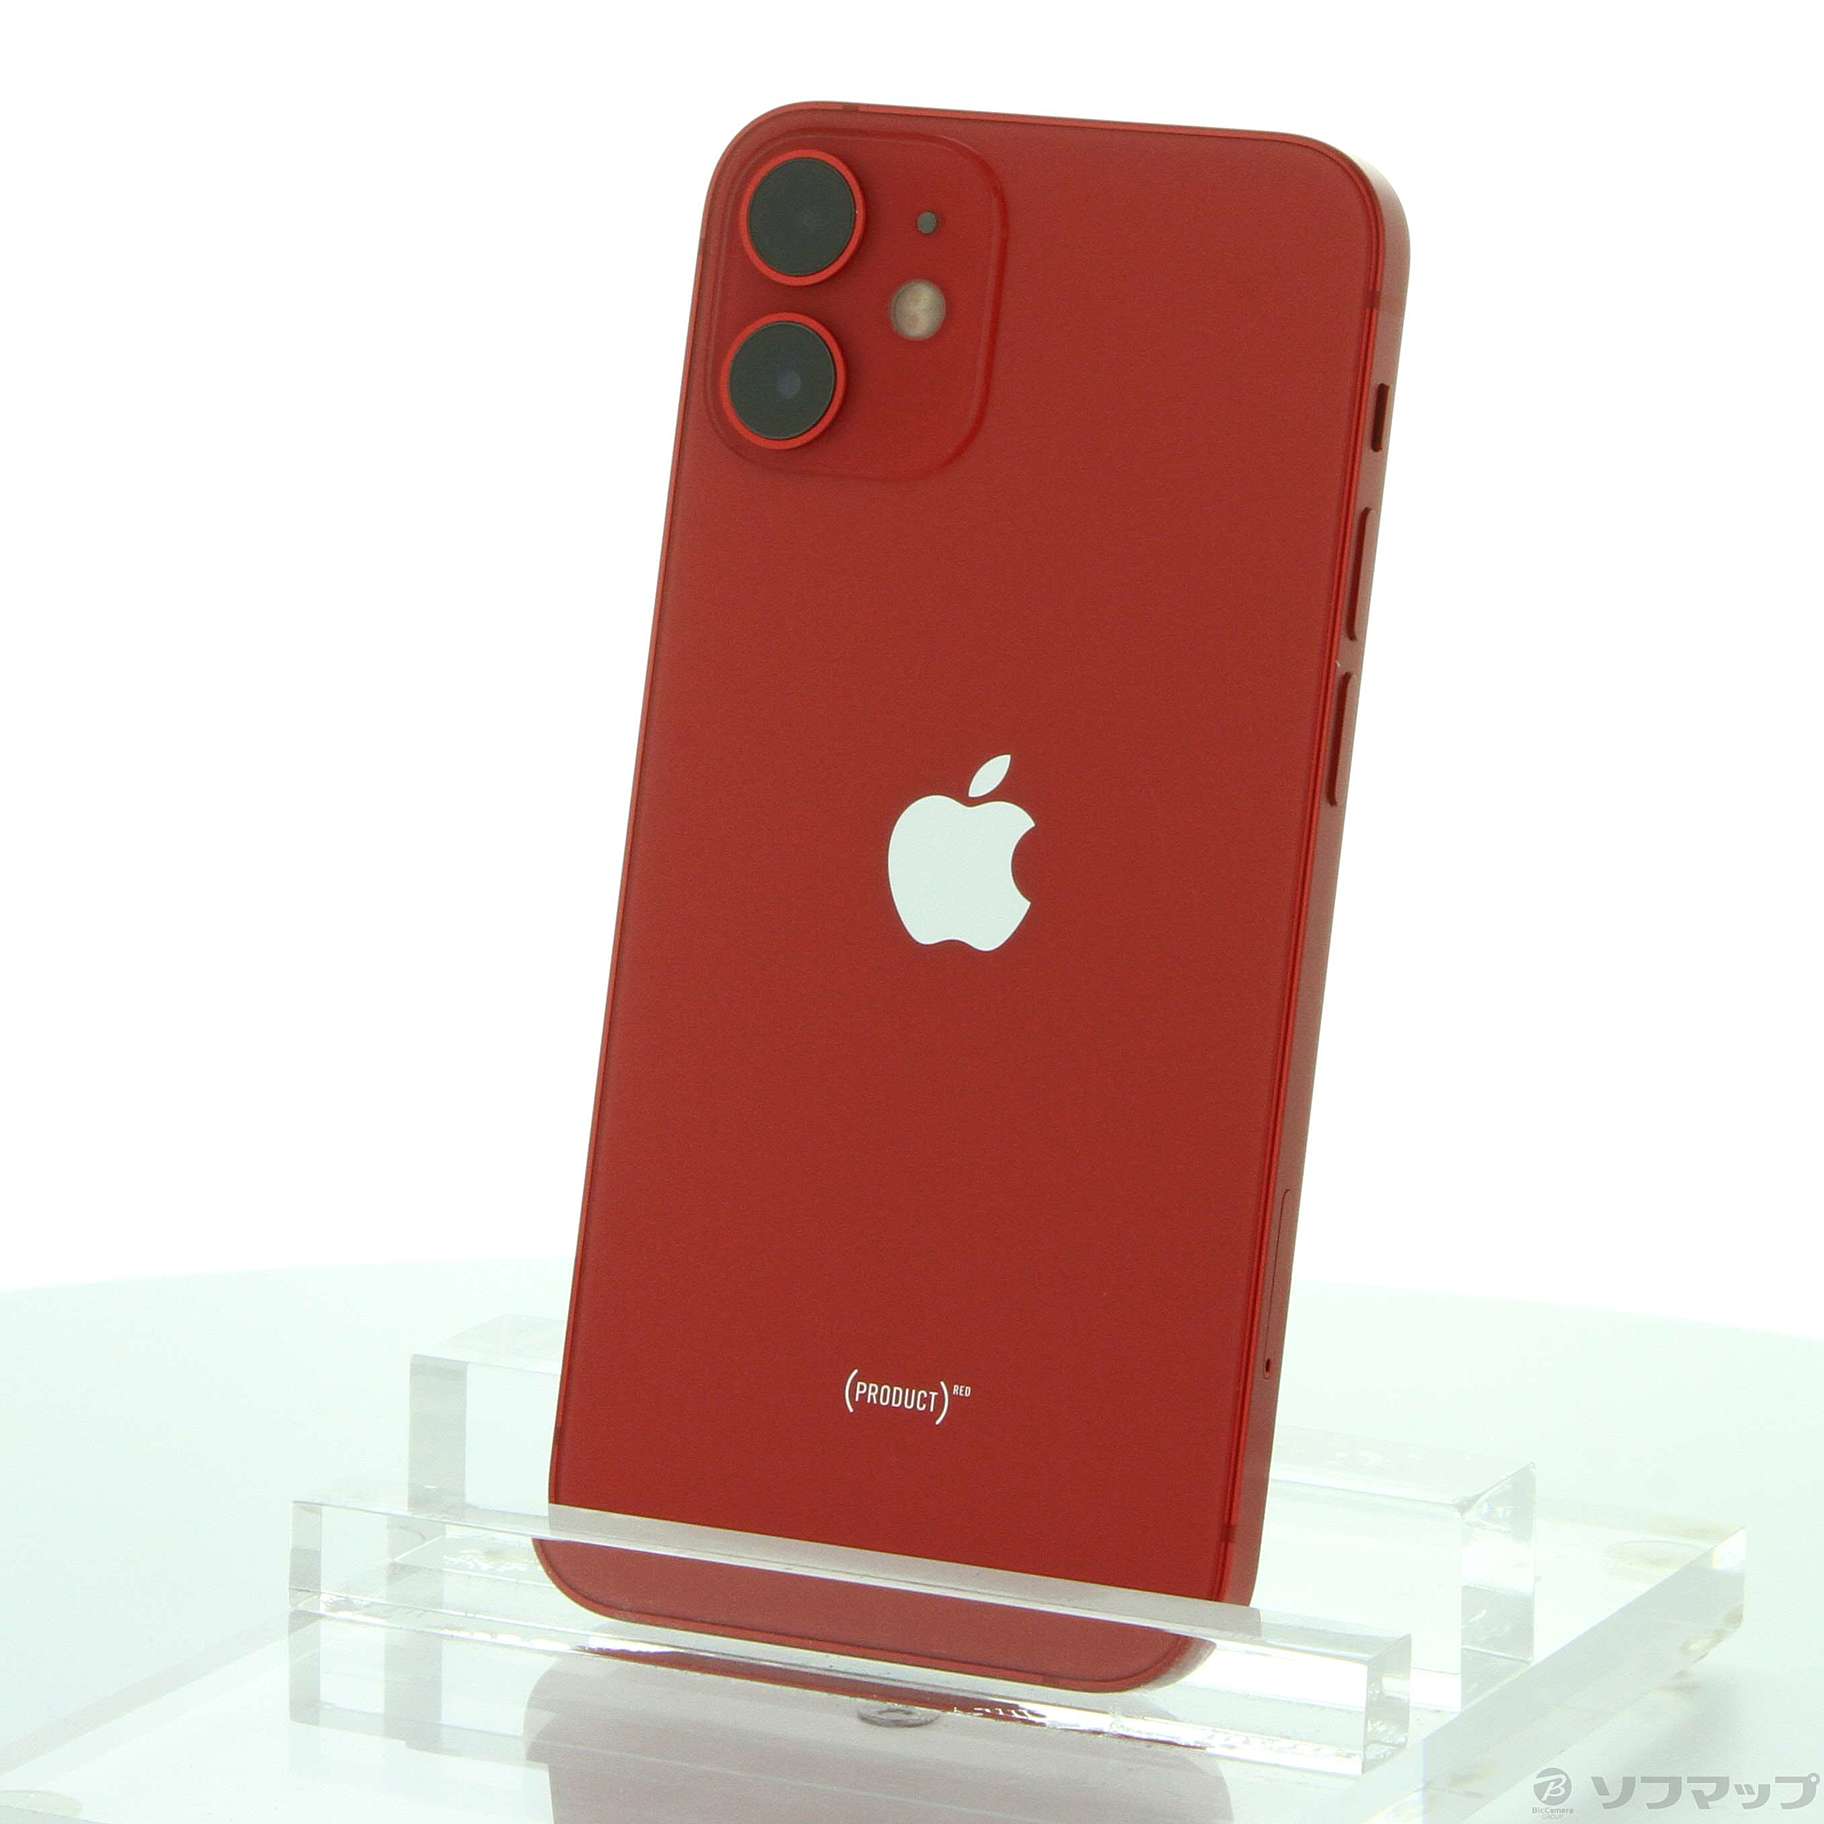 iPhone 12 mini (PRODUCT)RED 64GB SIMフリー [レッド] 中古(白ロム